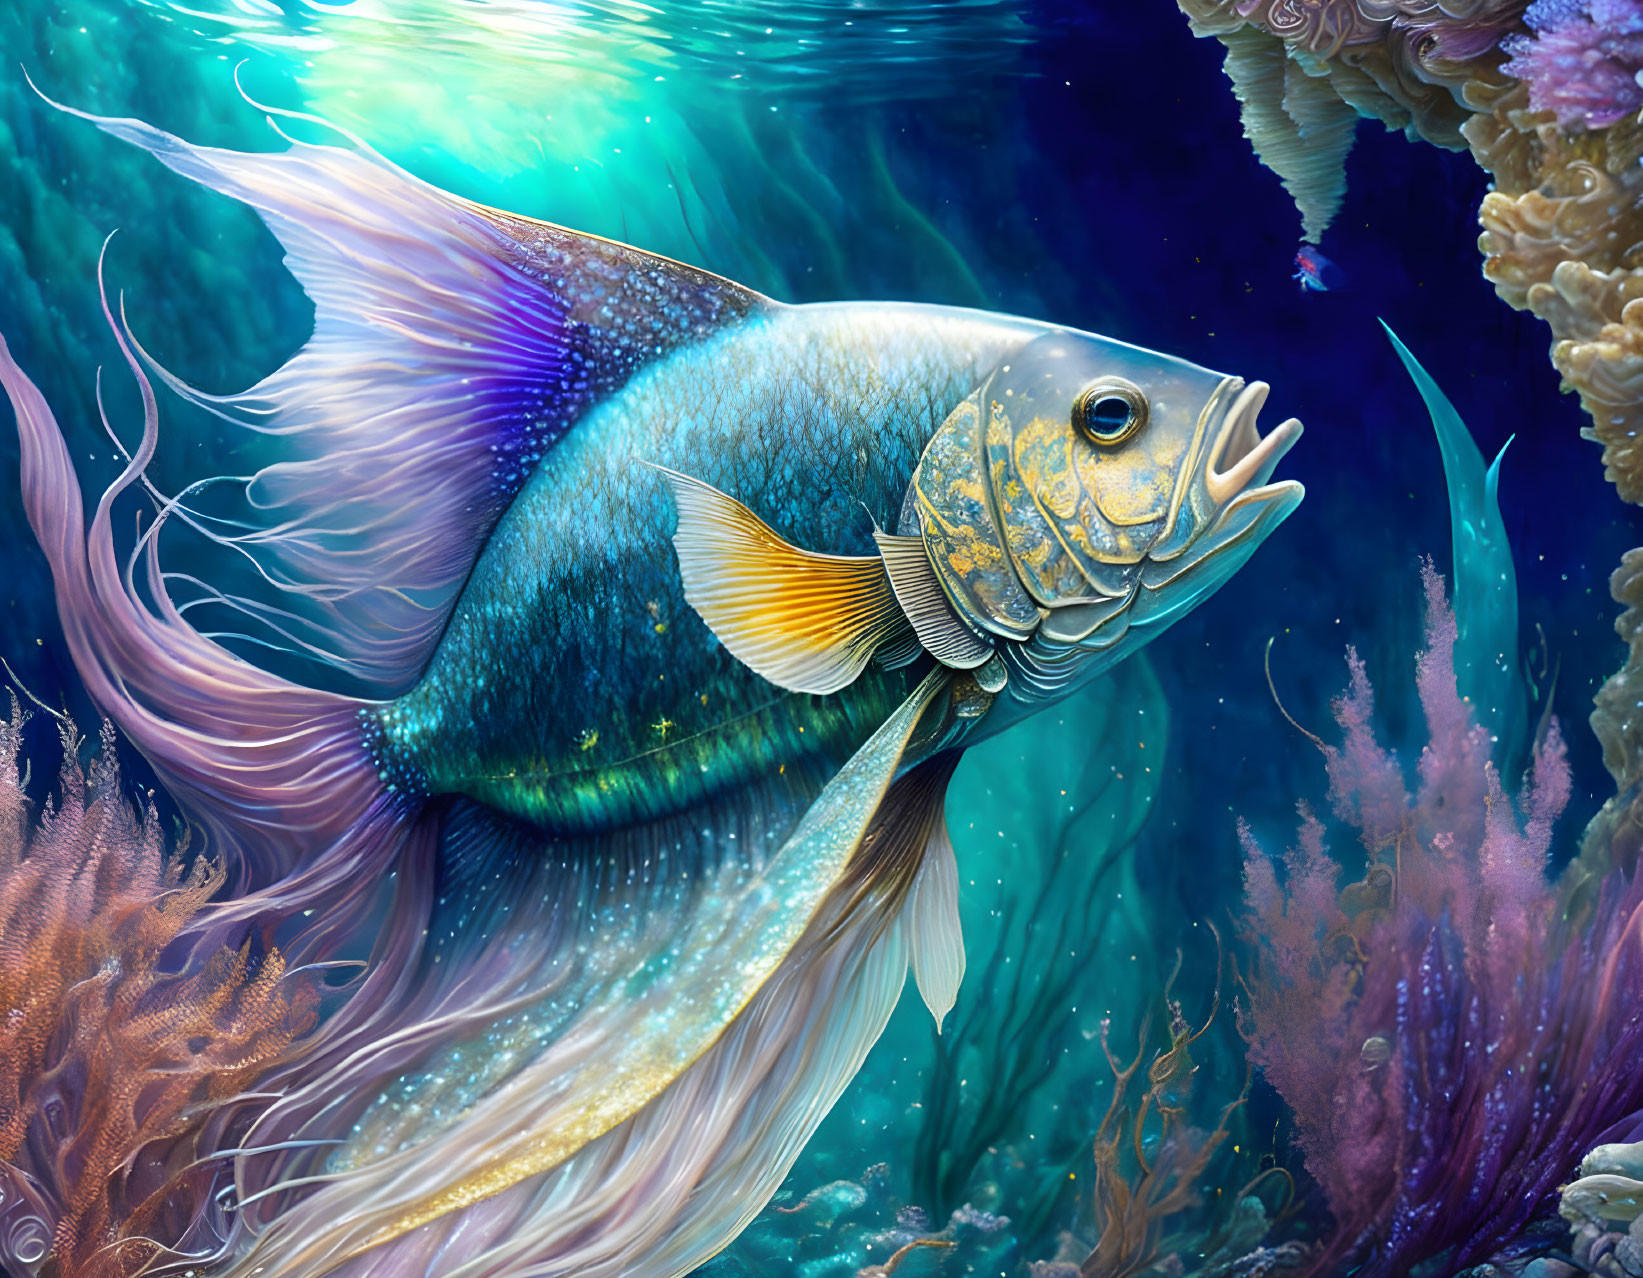 Colorful Digital Illustration of Vibrant Fish in Coral Landscape